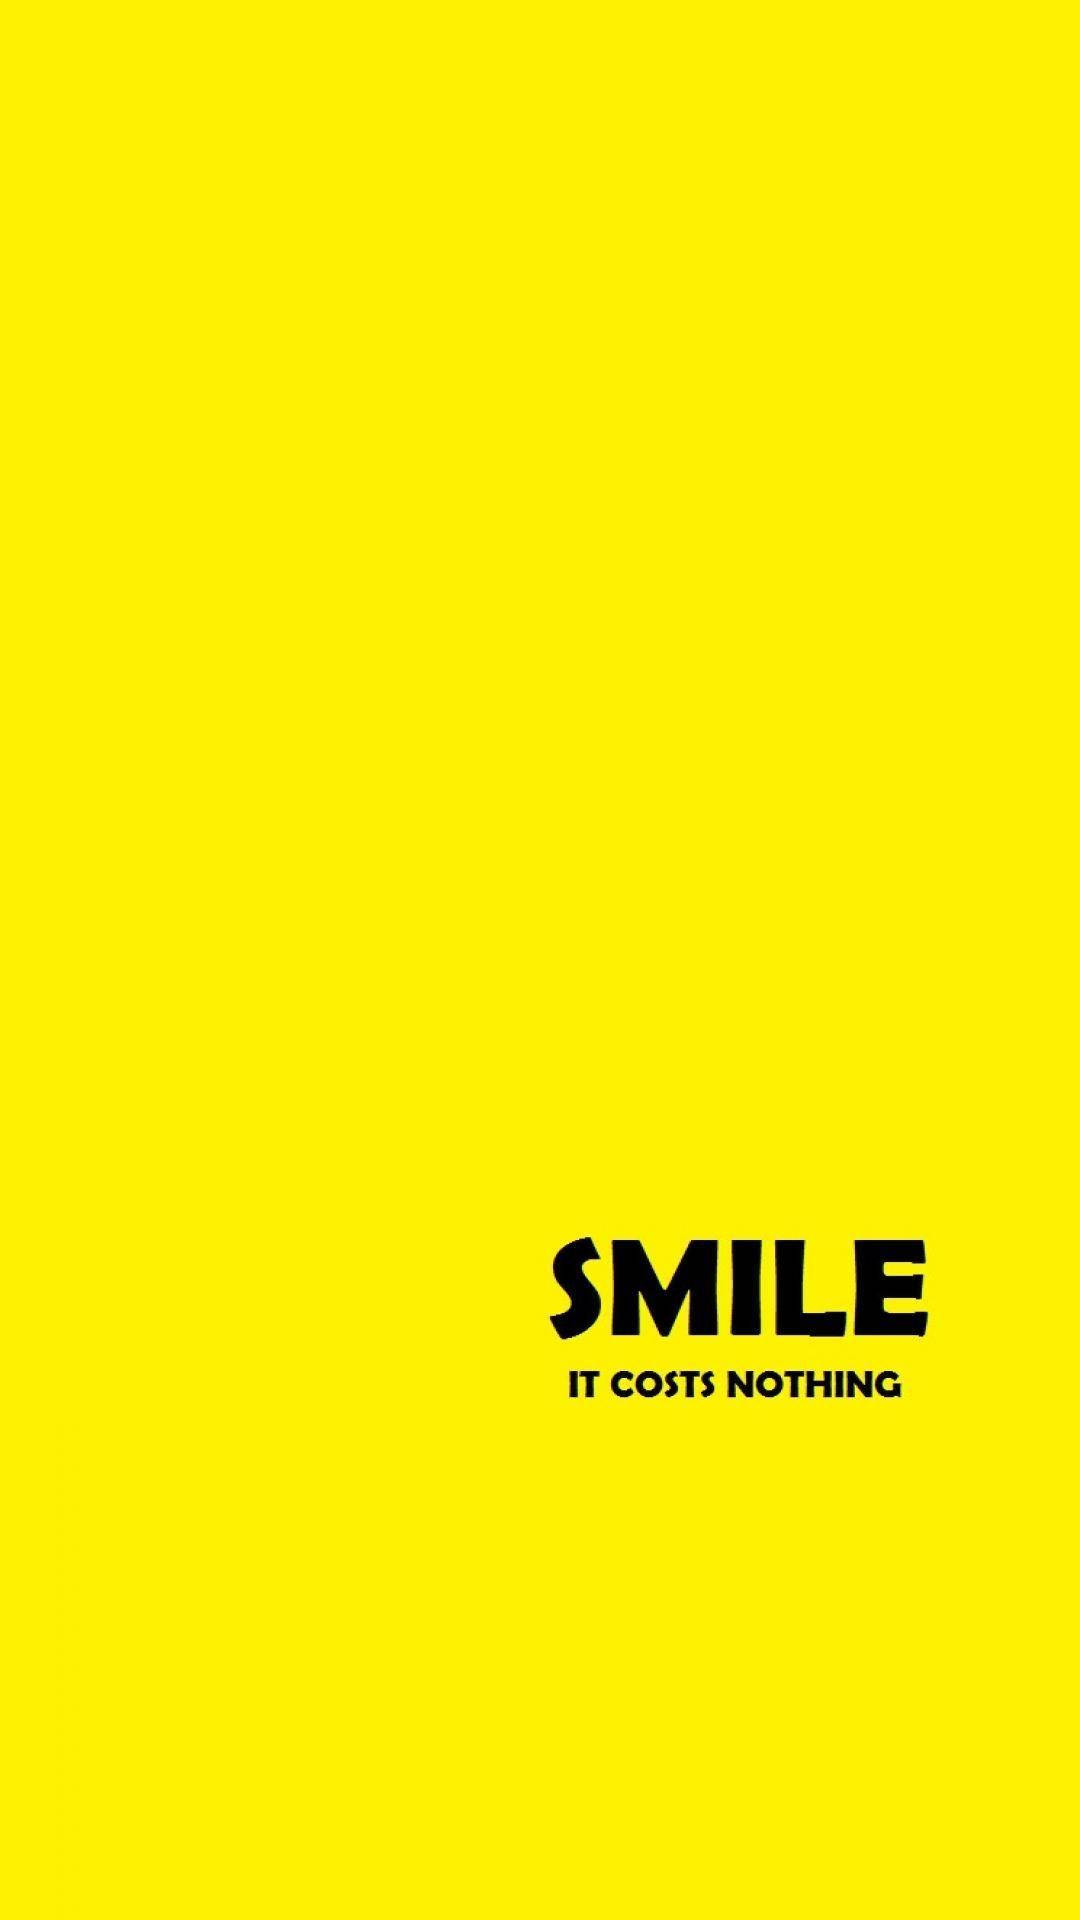 Smile Quote Plain Yellow Phone Wallpaper